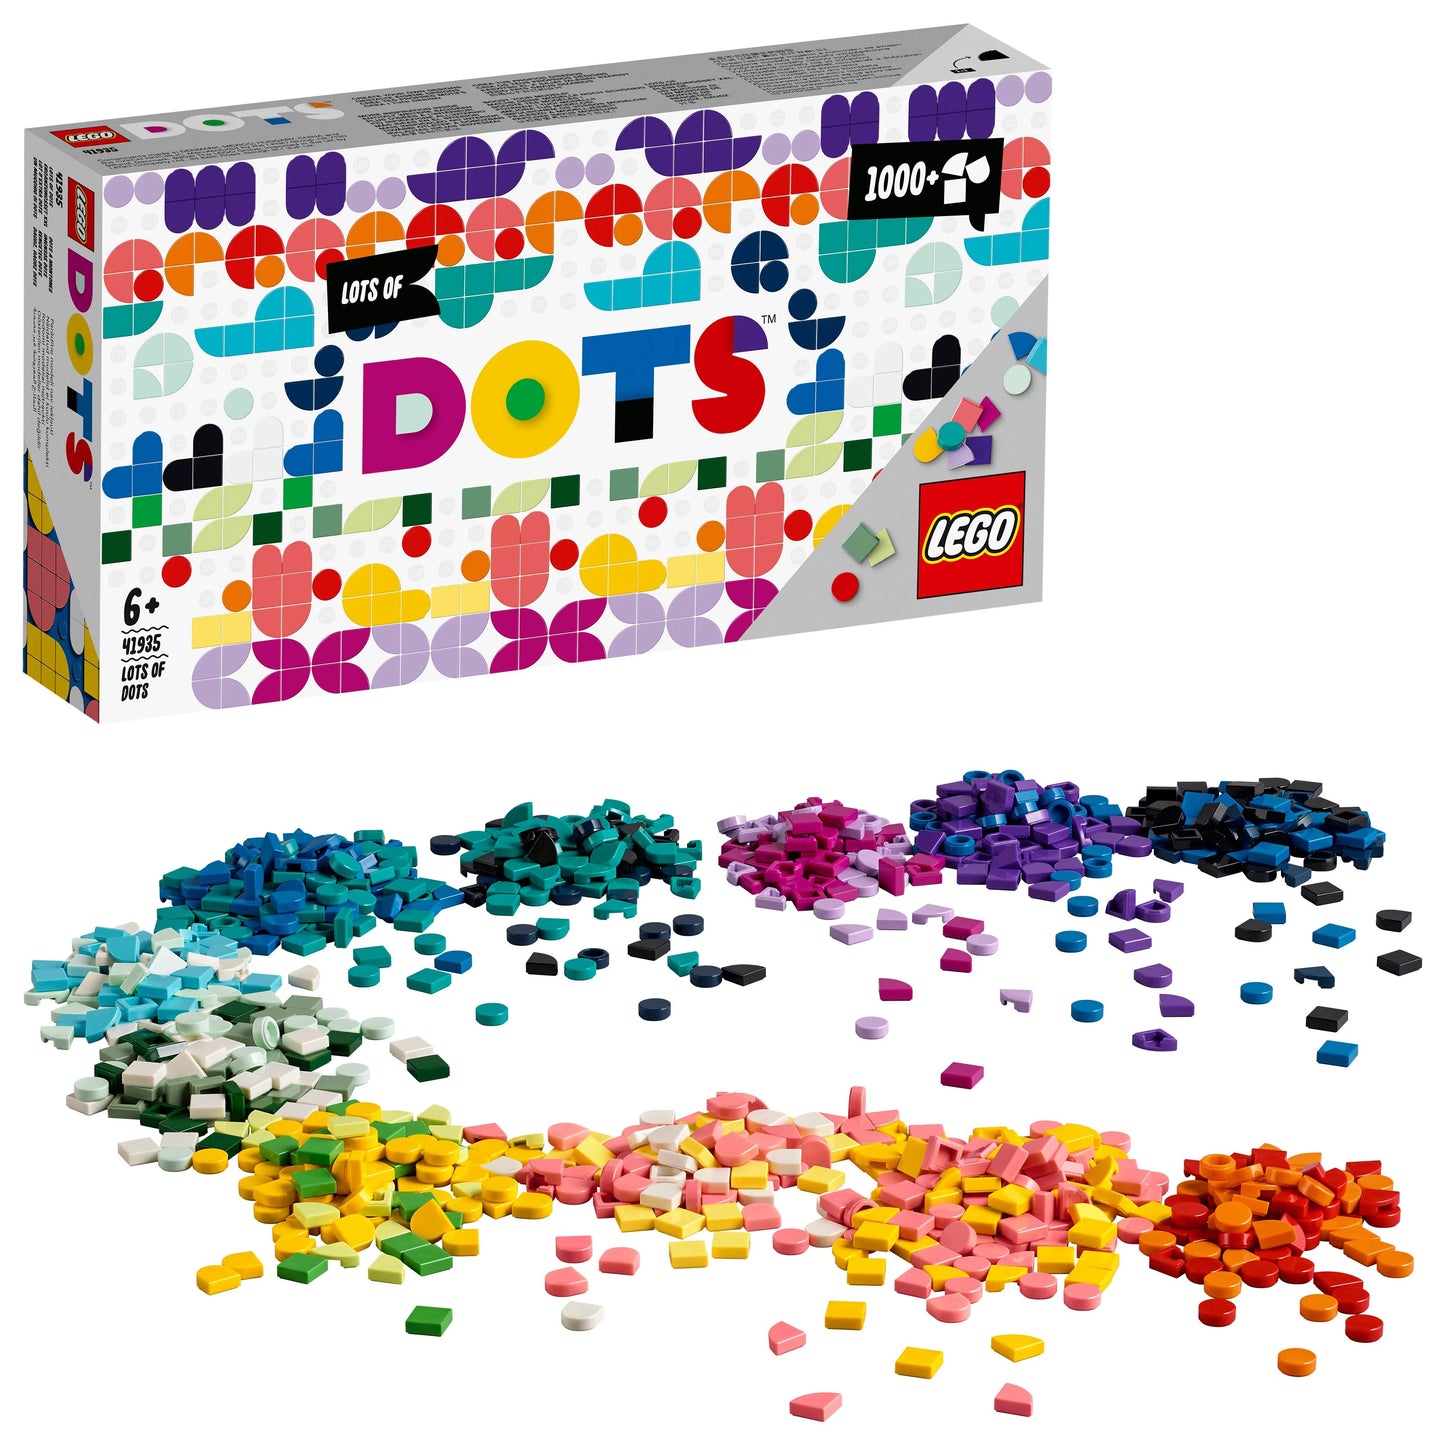 Heaps of DOTS-LEGO Dots